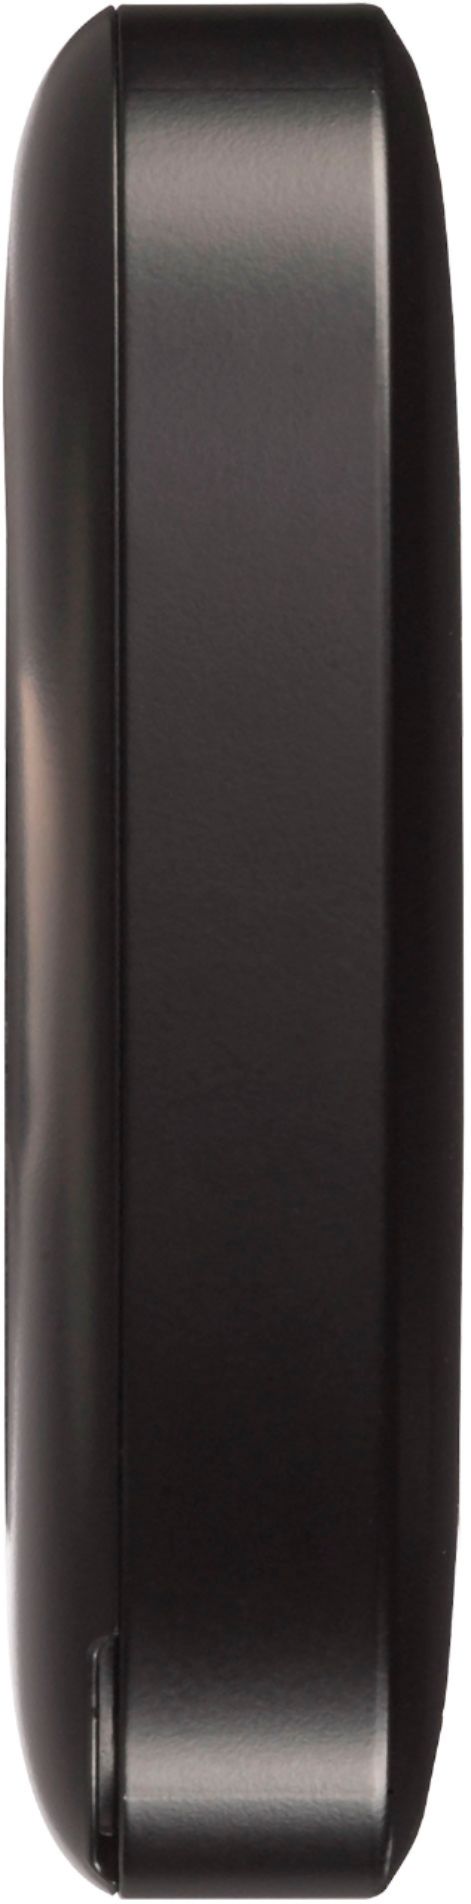 Left View: Verizon - Jetpack MiFi 8800L 4G LTE Mobile Hotspot - Gray